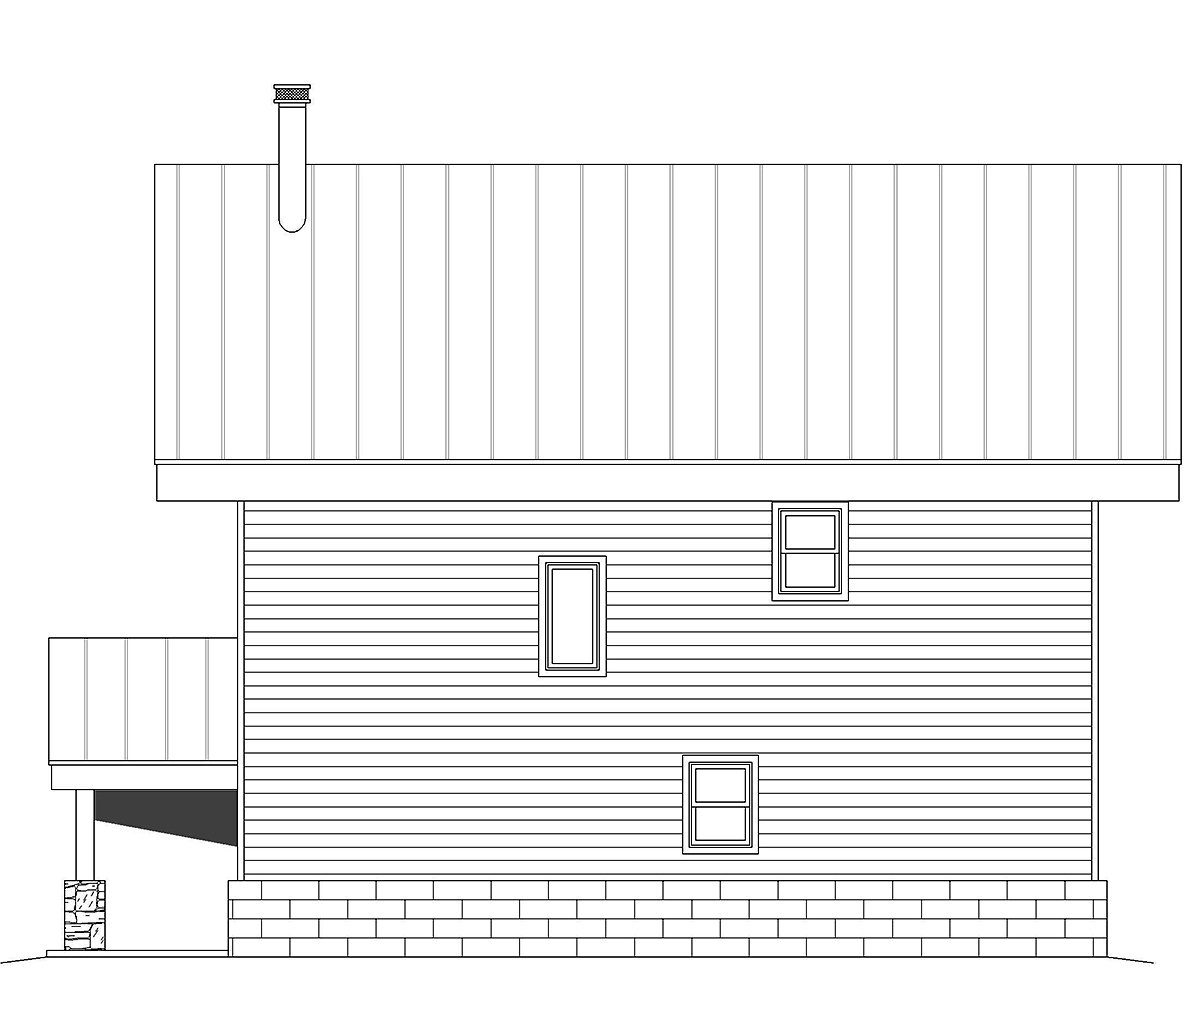 Coastal, Contemporary, Modern Garage-Living Plan 40863 with 2 Beds, 2 Baths, 2 Car Garage Rear Elevation